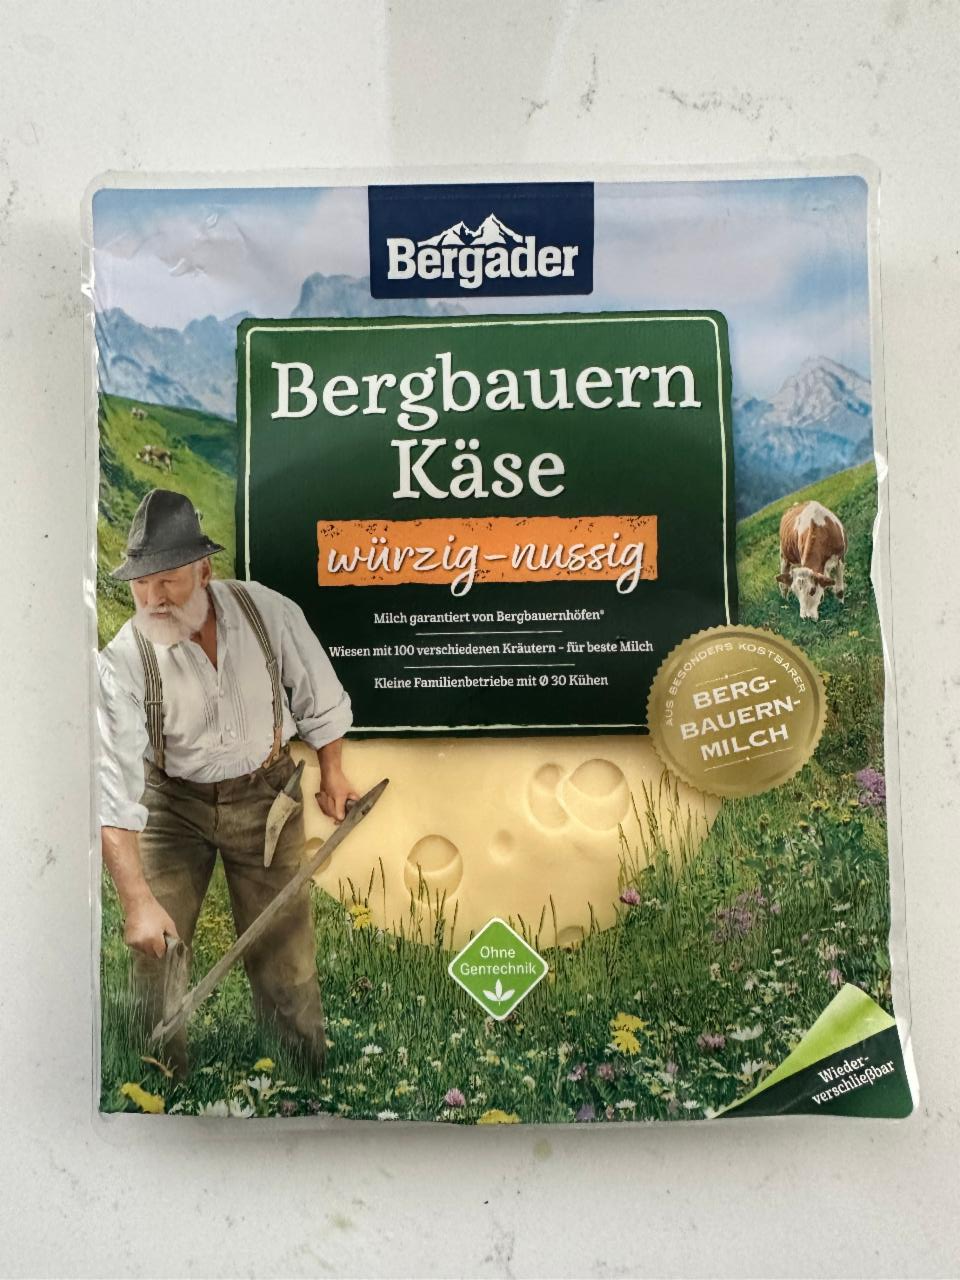 Фото - Bergbauern Käse würzig nussig Bergader